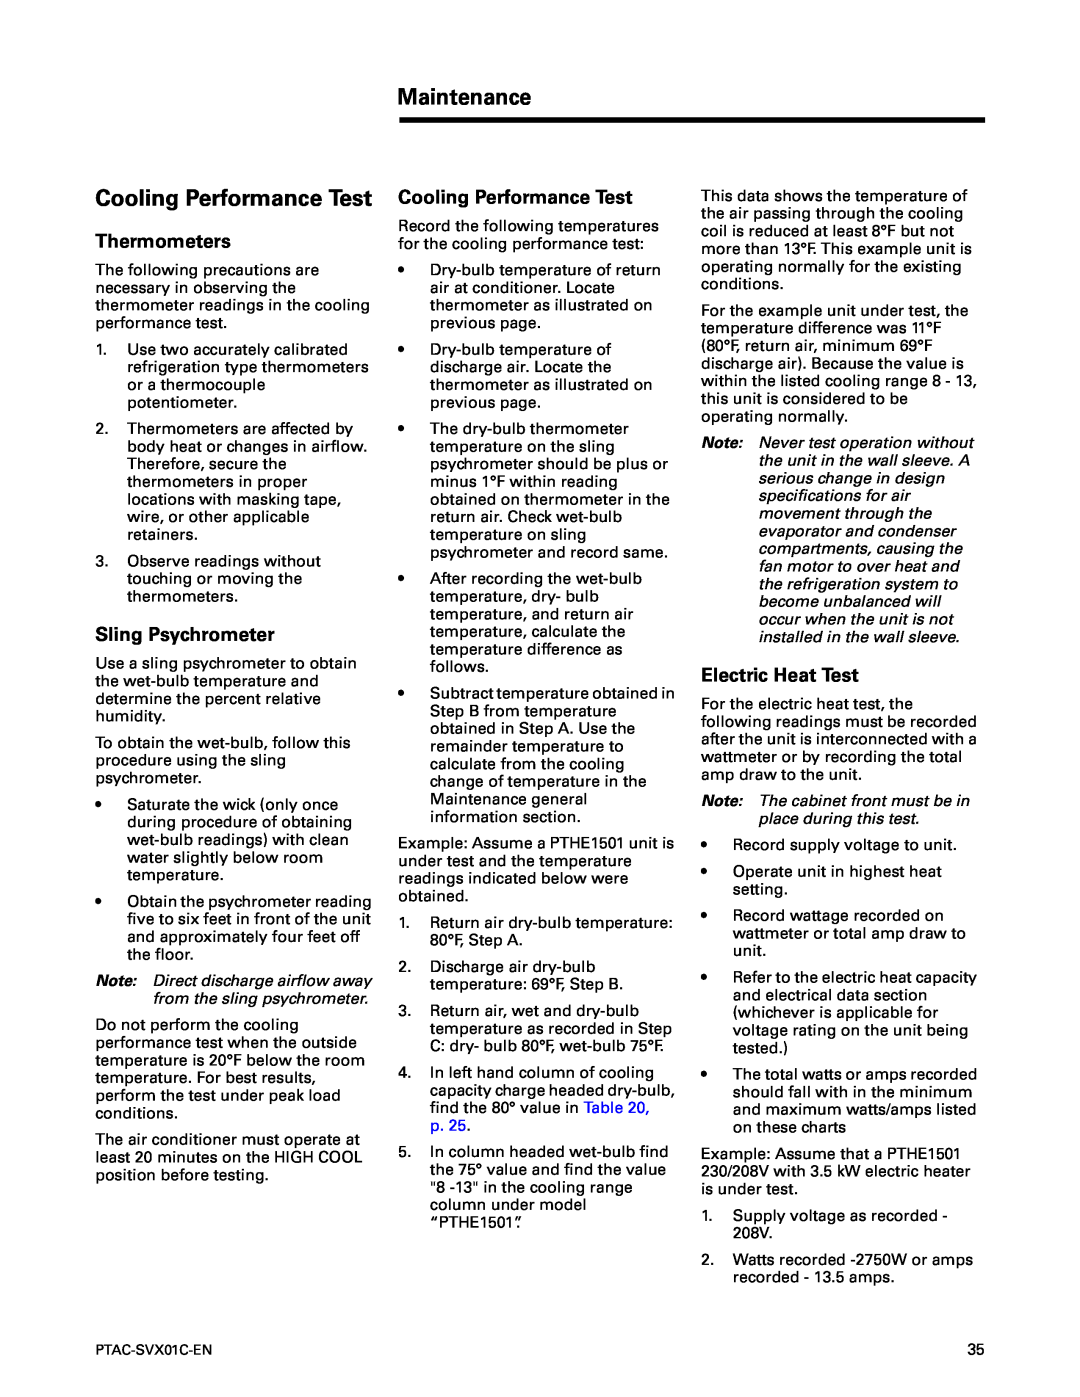 Trane PTAC-SVX01C-EN manual Cooling Performance Test, Thermometers, Sling Psychrometer, Electric Heat Test, Maintenance 